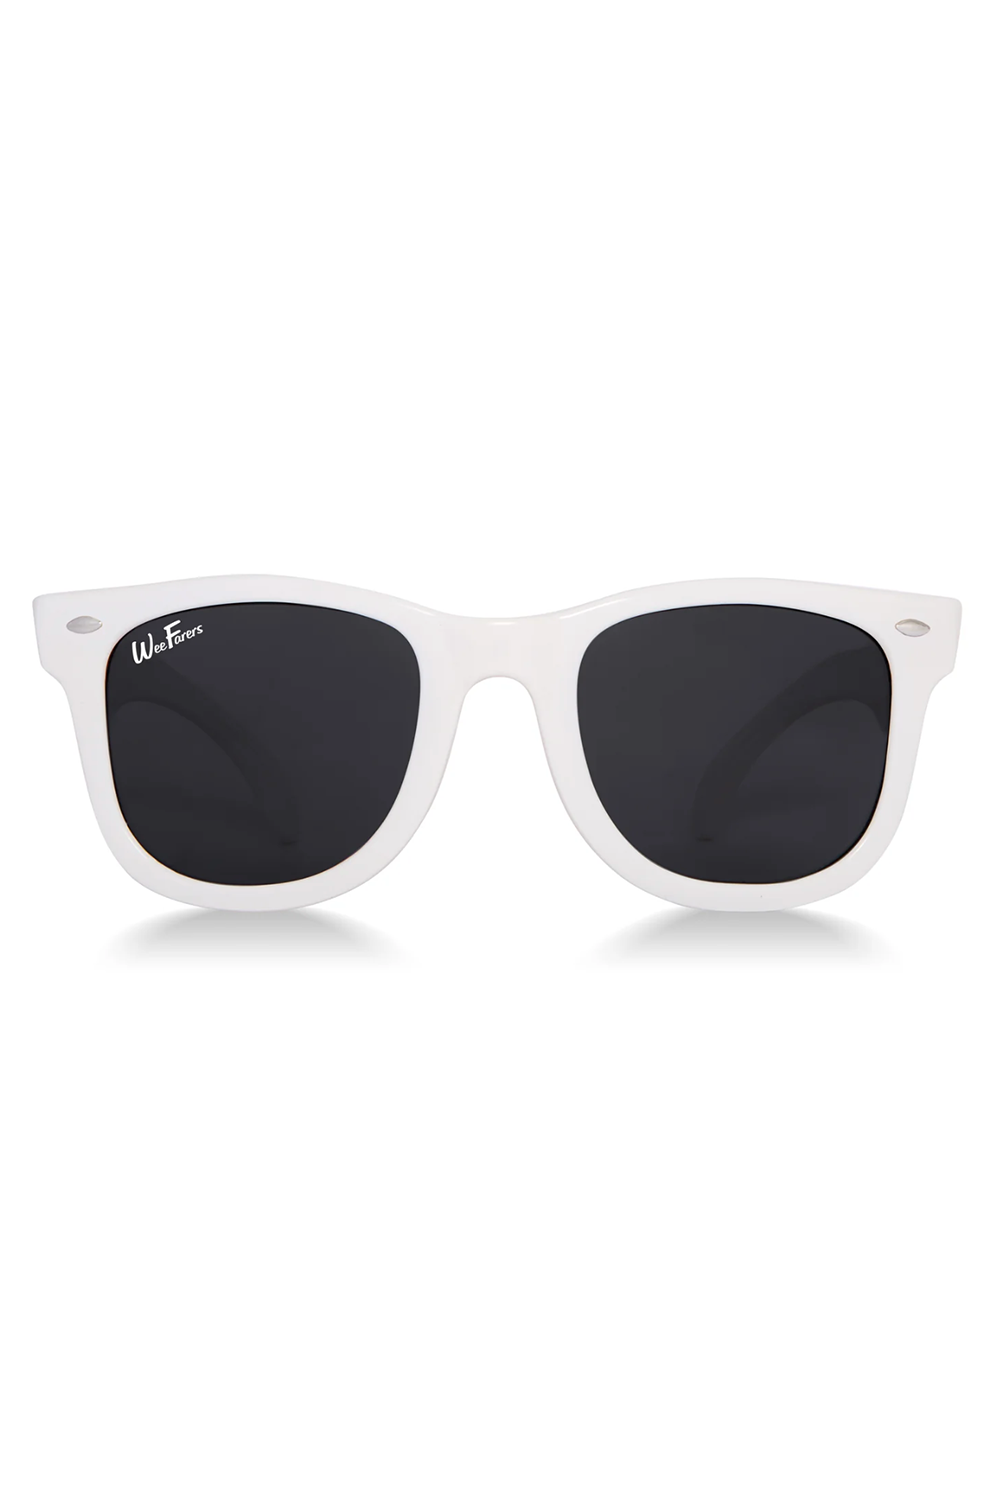 WeeFarers Non-Polarized Kids Sunglasses - White